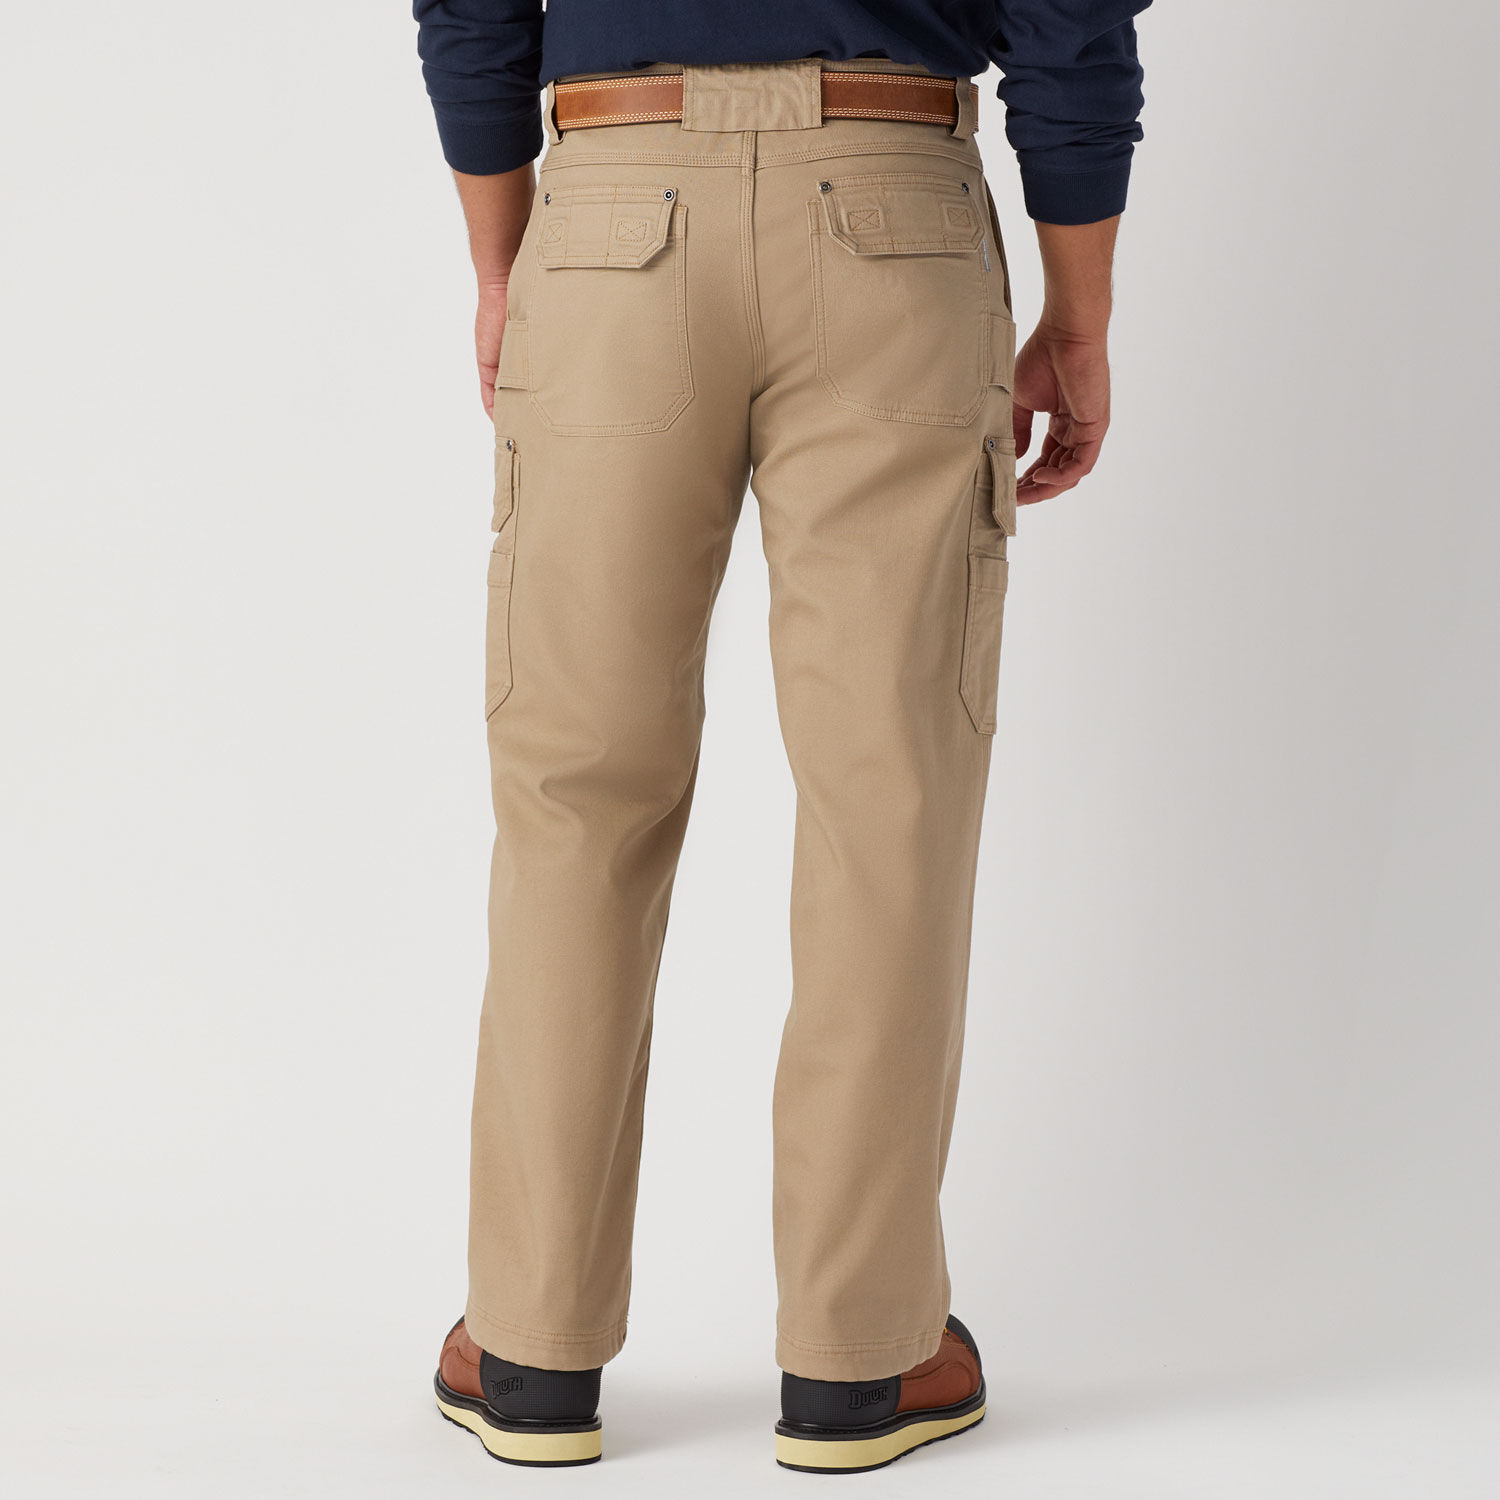 10 Best Flannel  Fleece Lined Cargo Pants for Work Insulated  Work Wear  Command